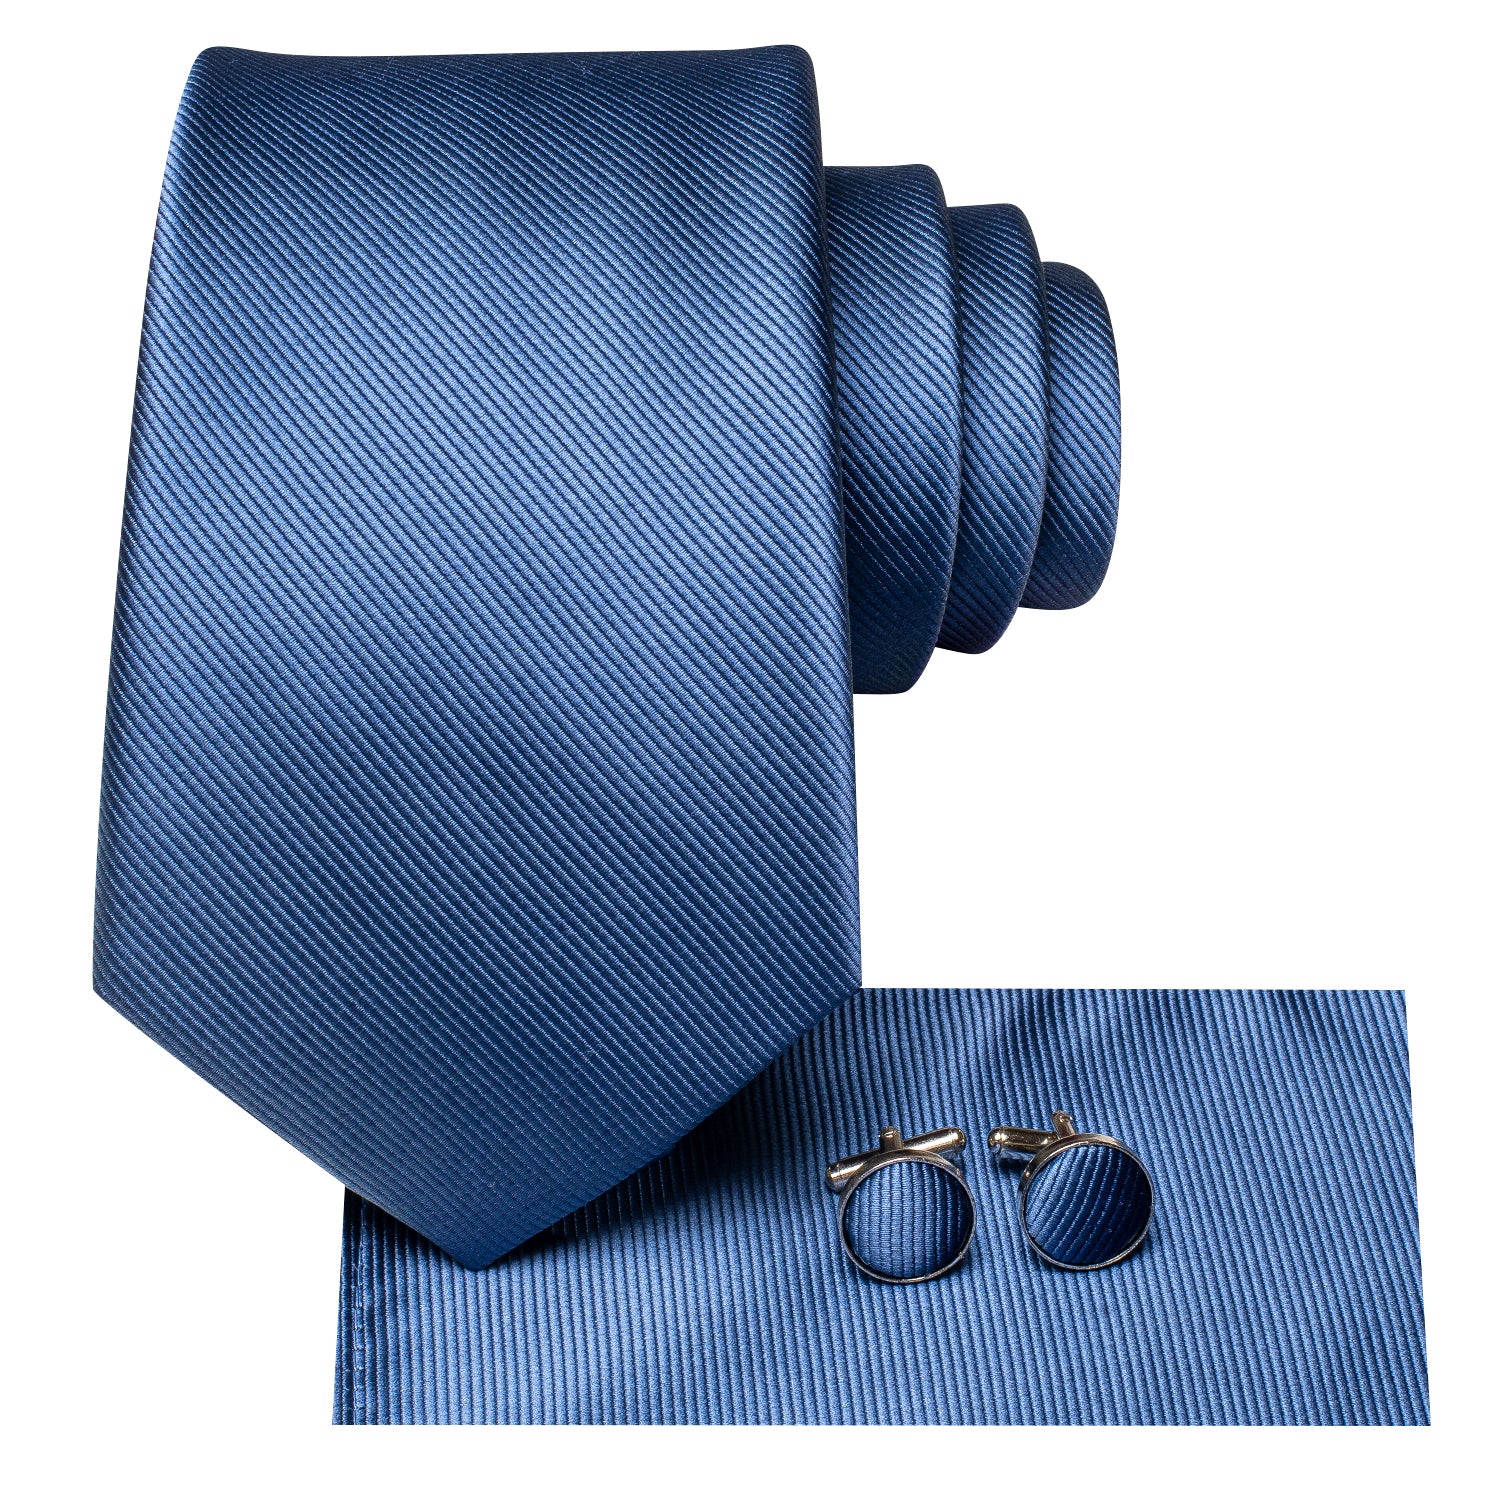 Dusty Blue Solid Tie Pocket Square Cufflinks Set